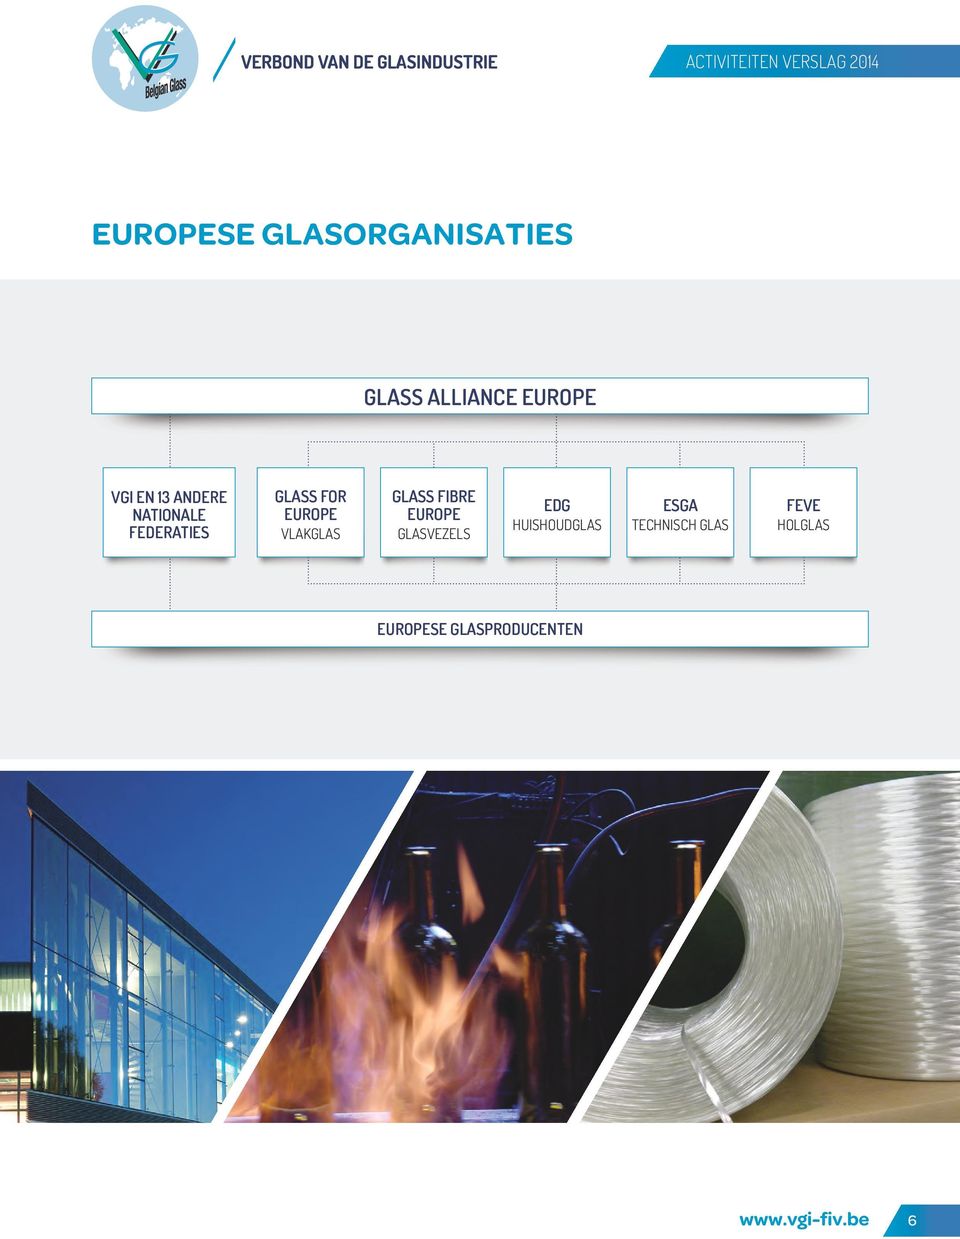 Vlakglas glass fibre europe glasvezels EDG